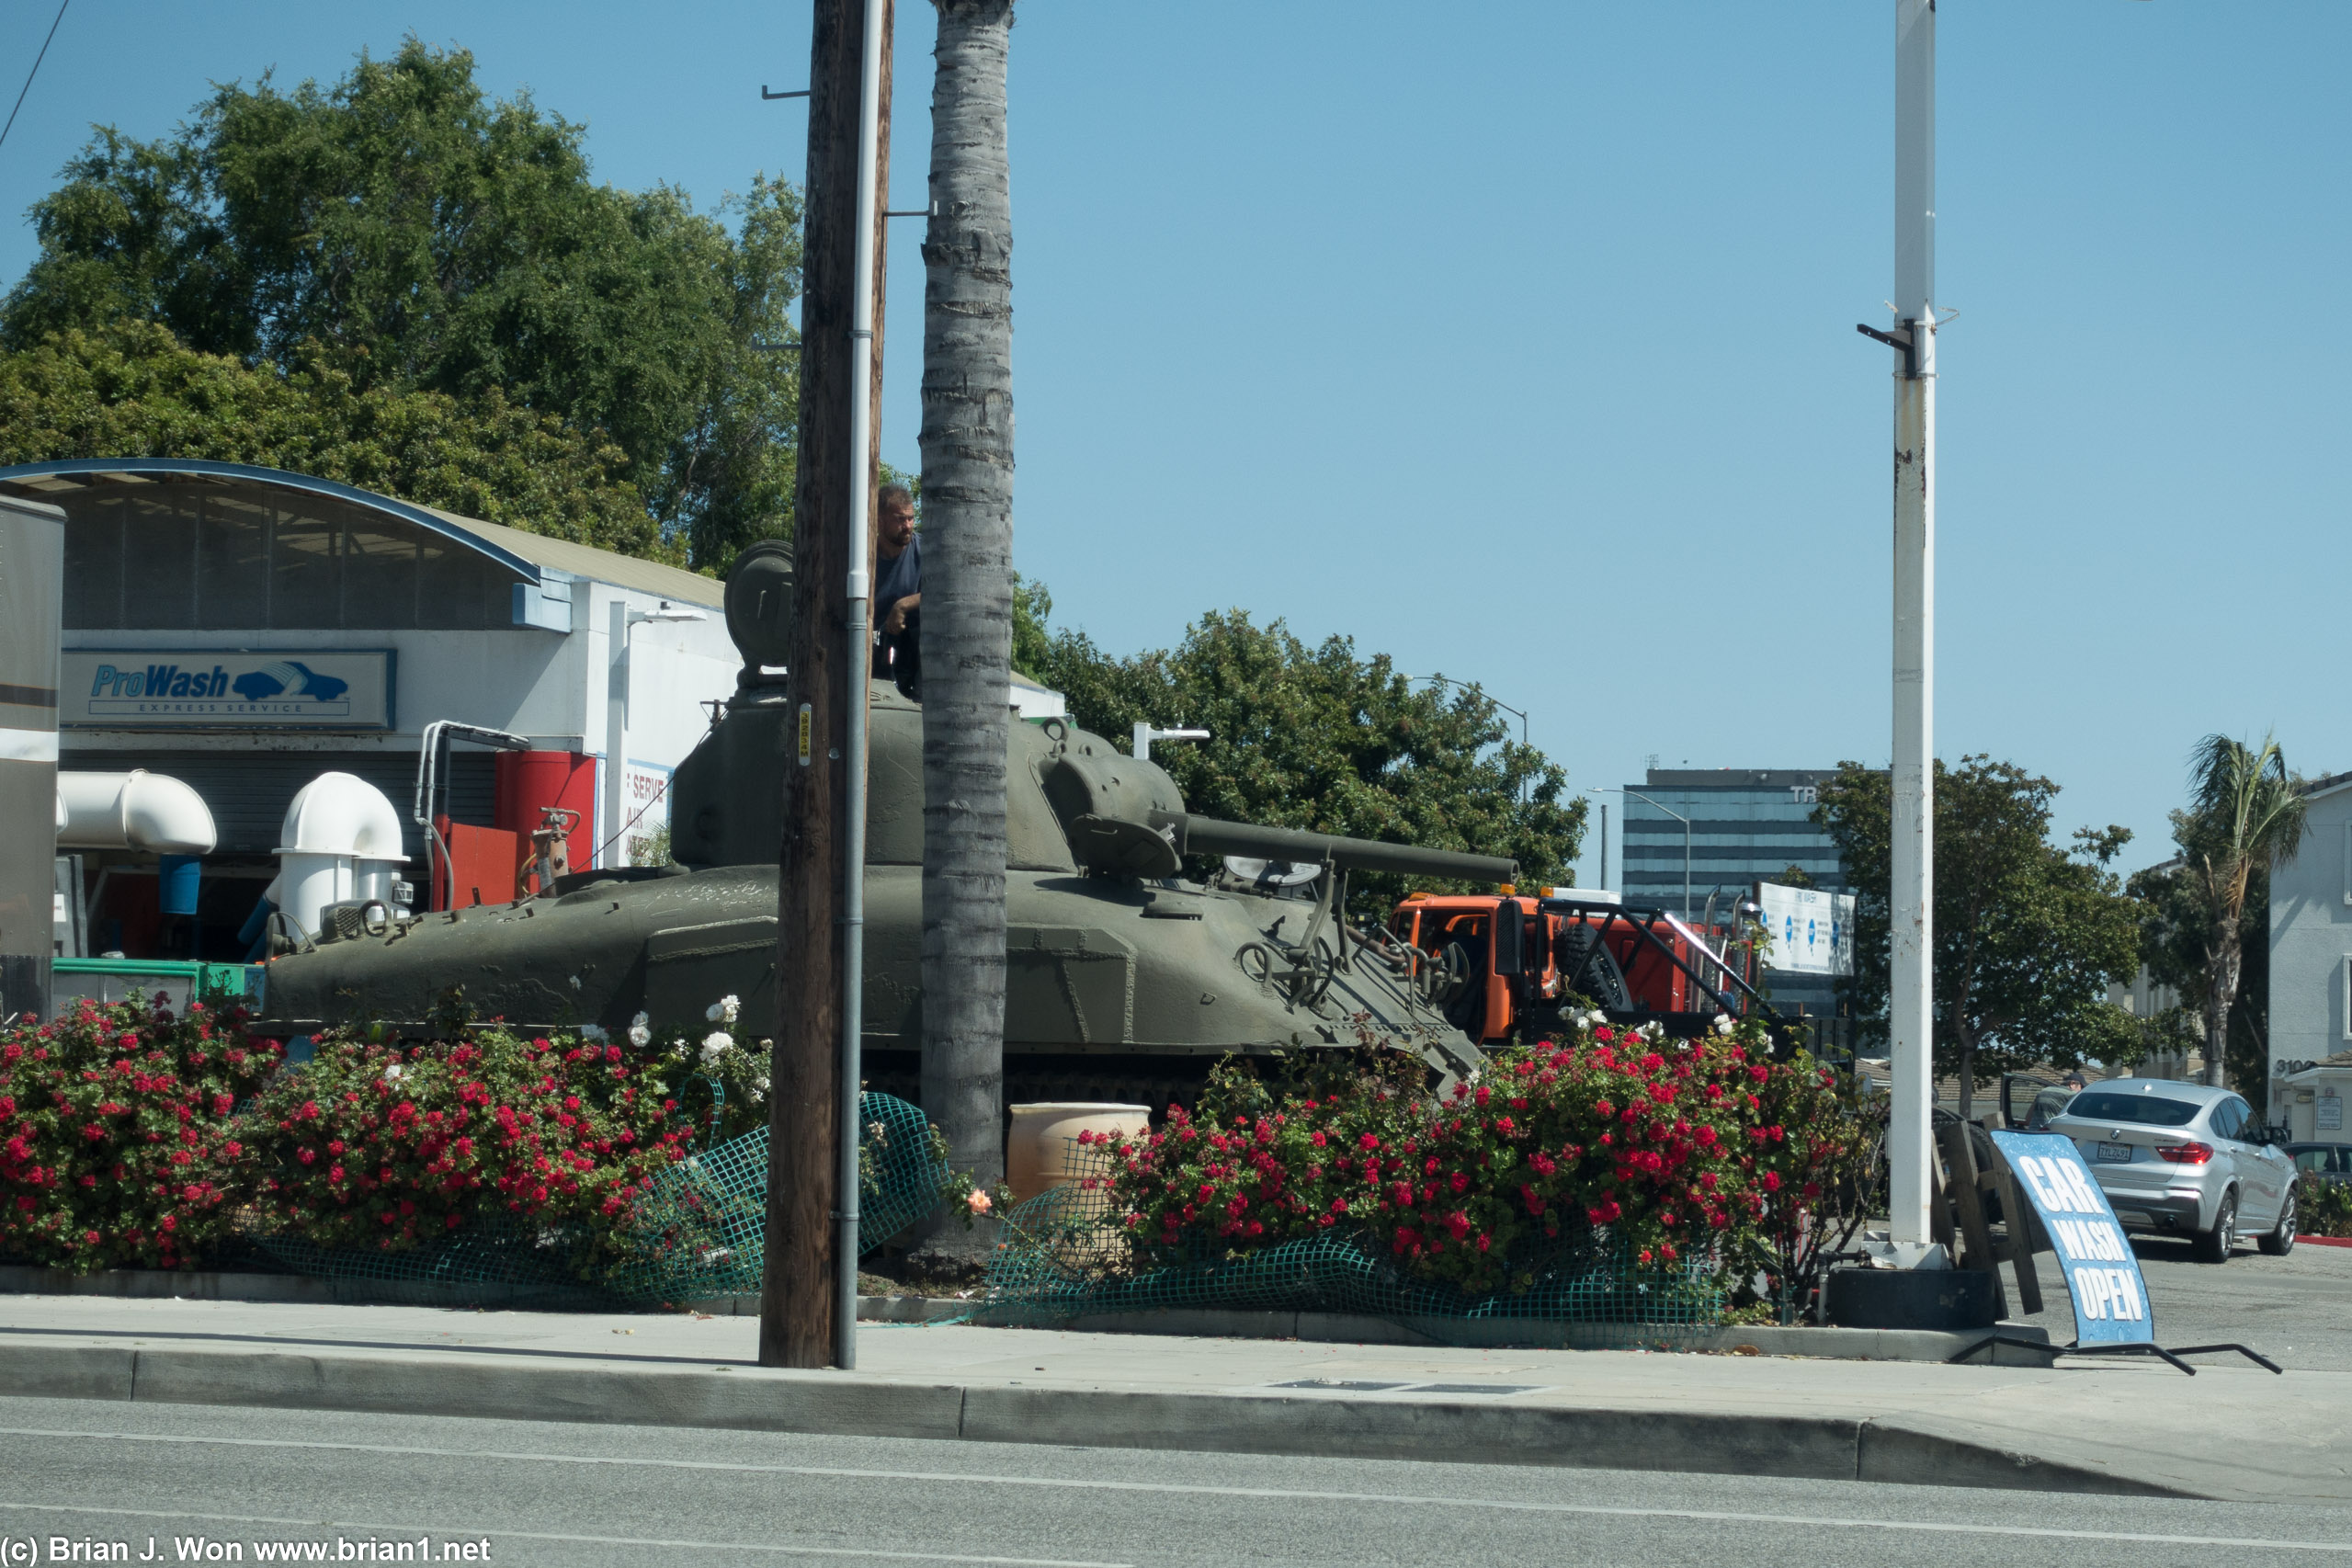 M4 Sherman at the corner gas station.